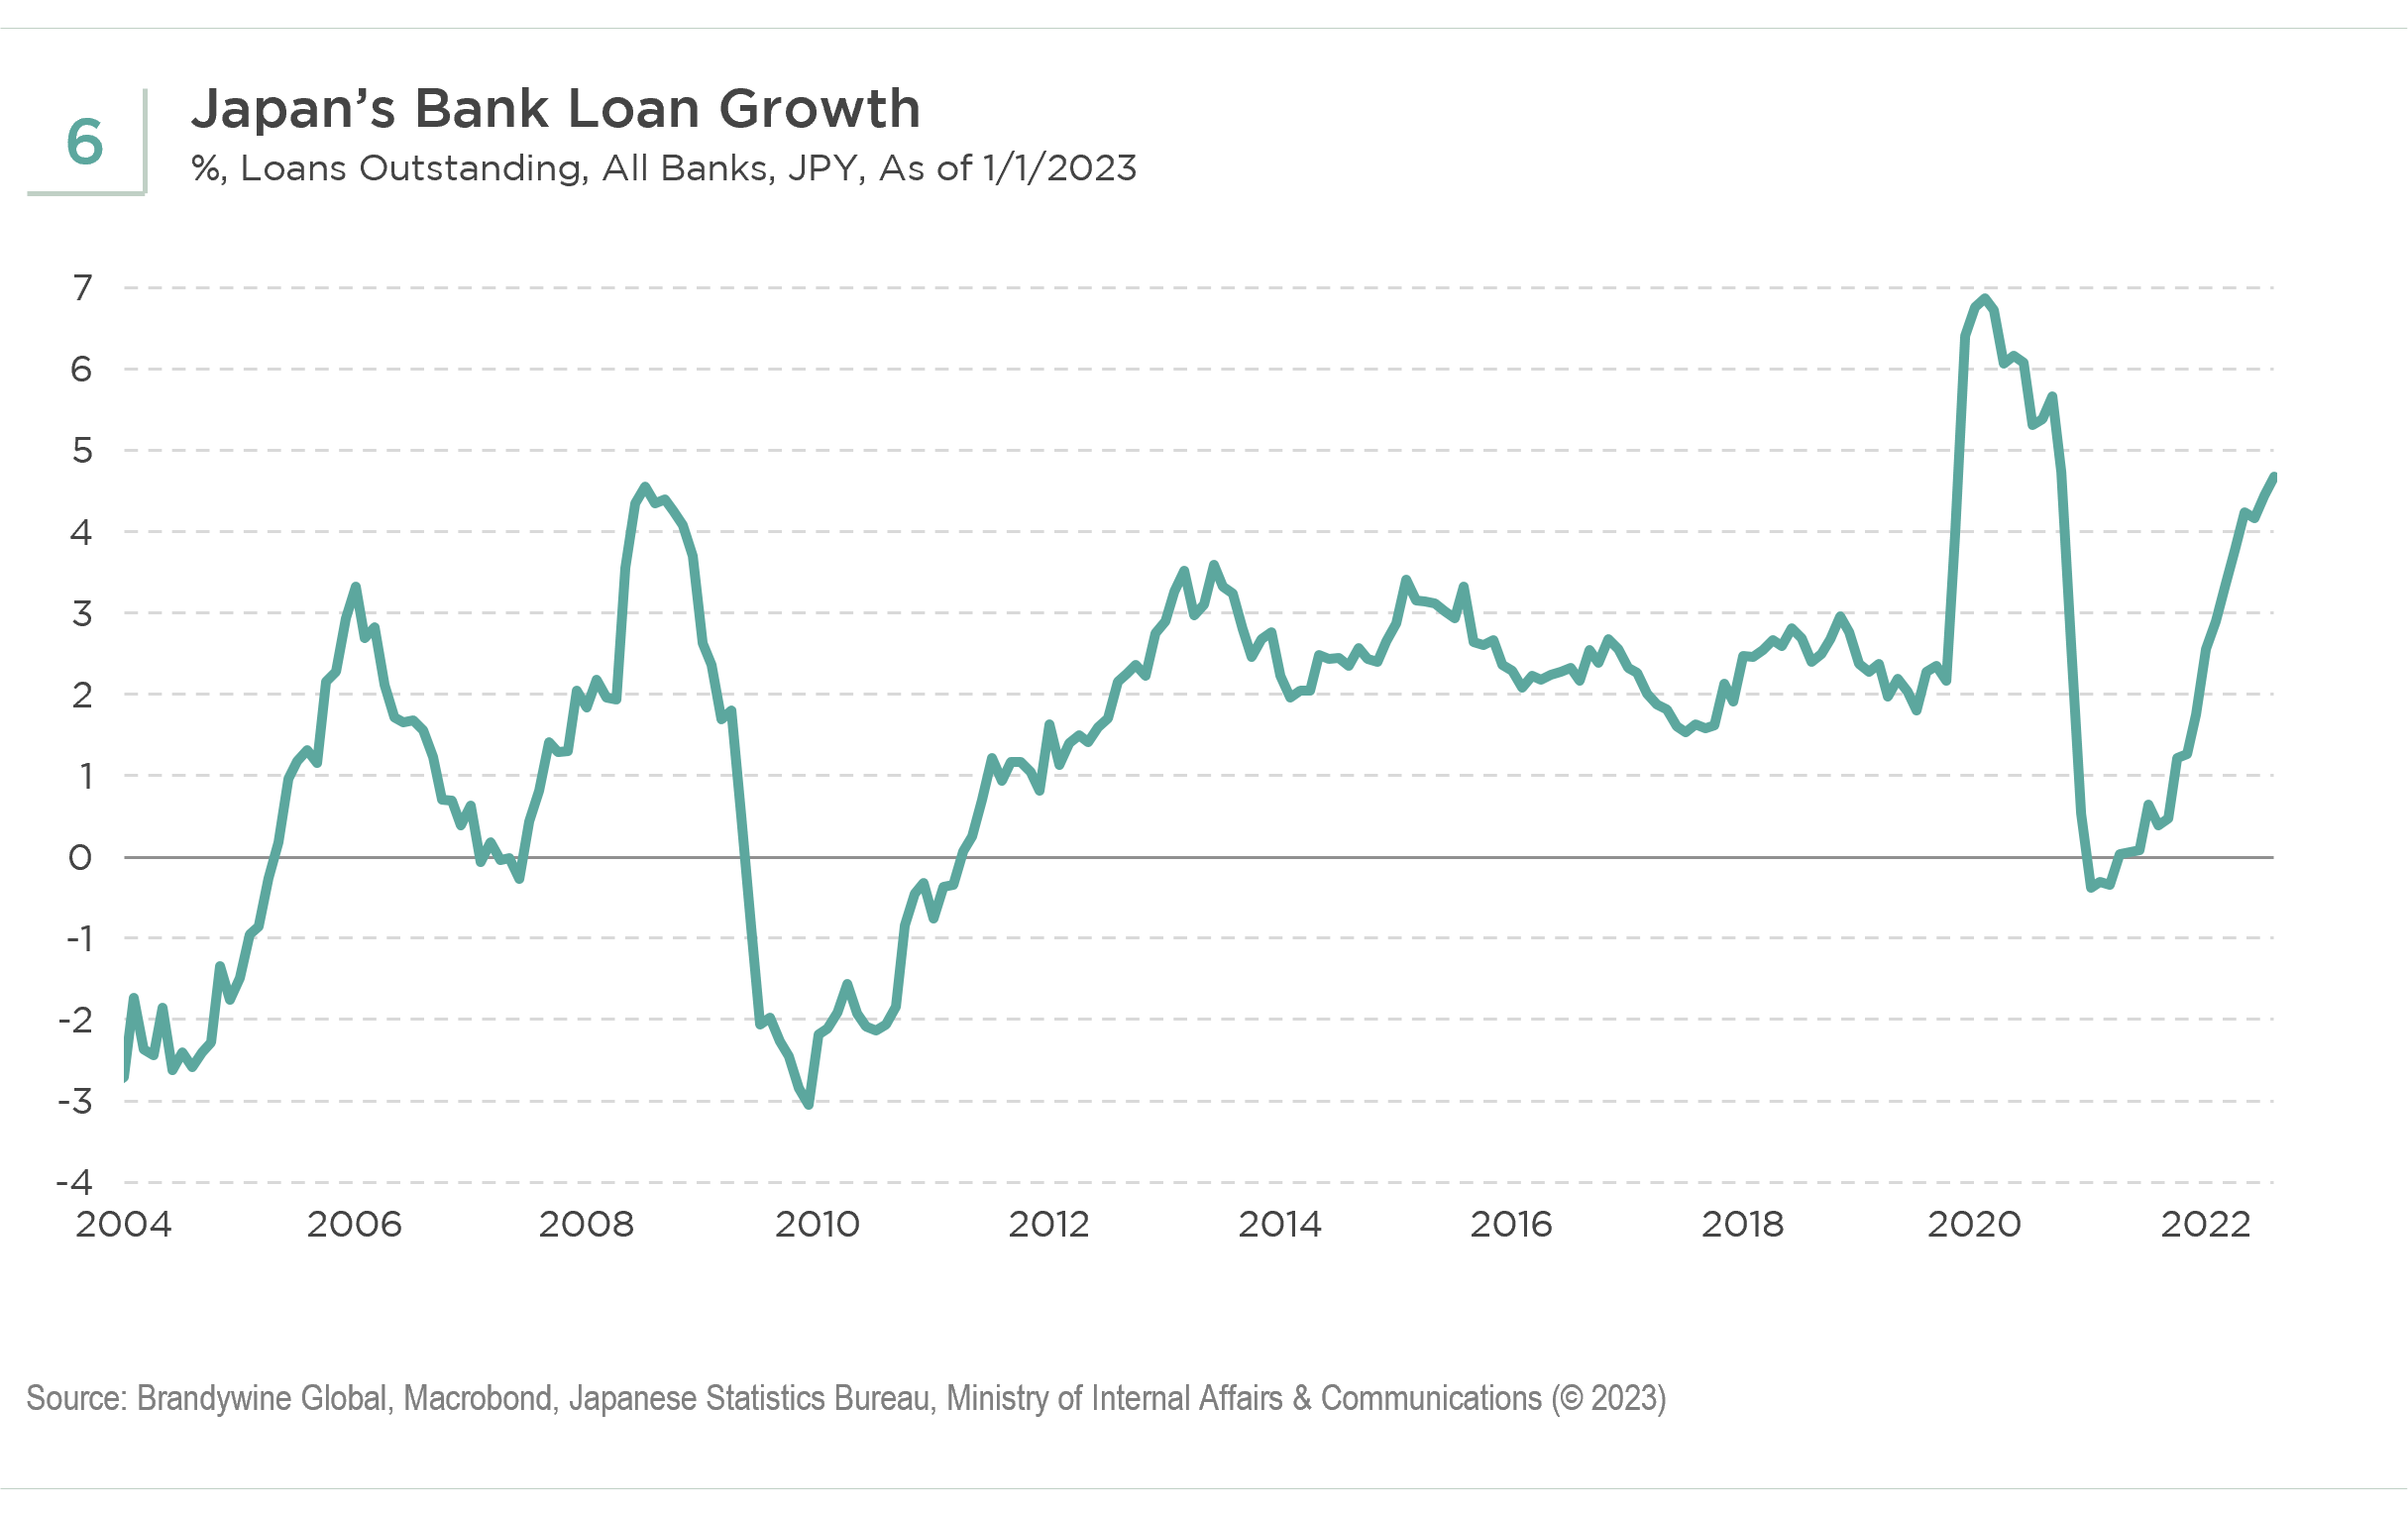 Japan's bank loan growth